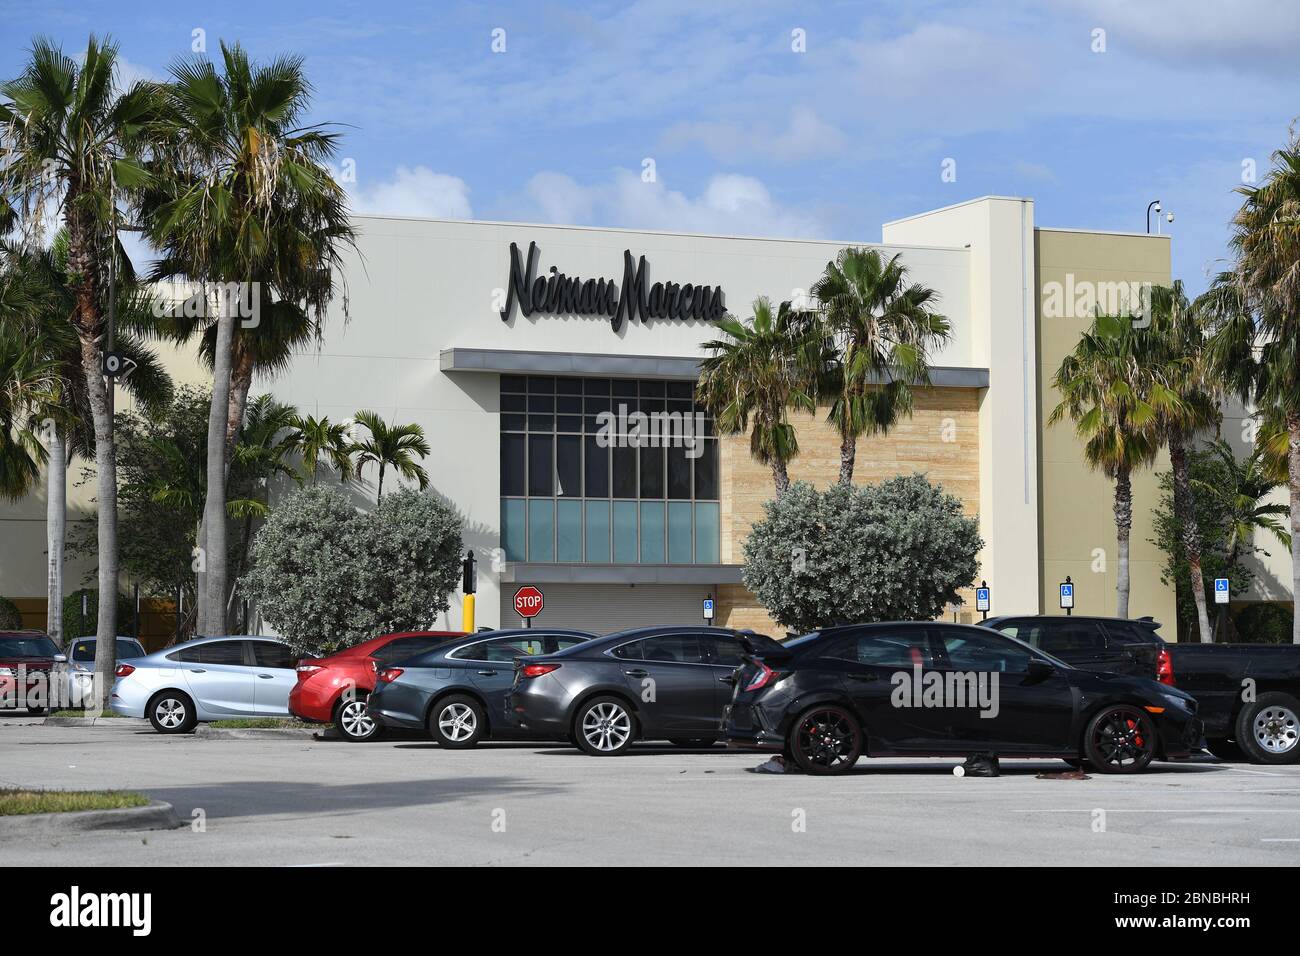 Neiman Marcus, Town Center Mall, Boca Raton, Florida / Charles